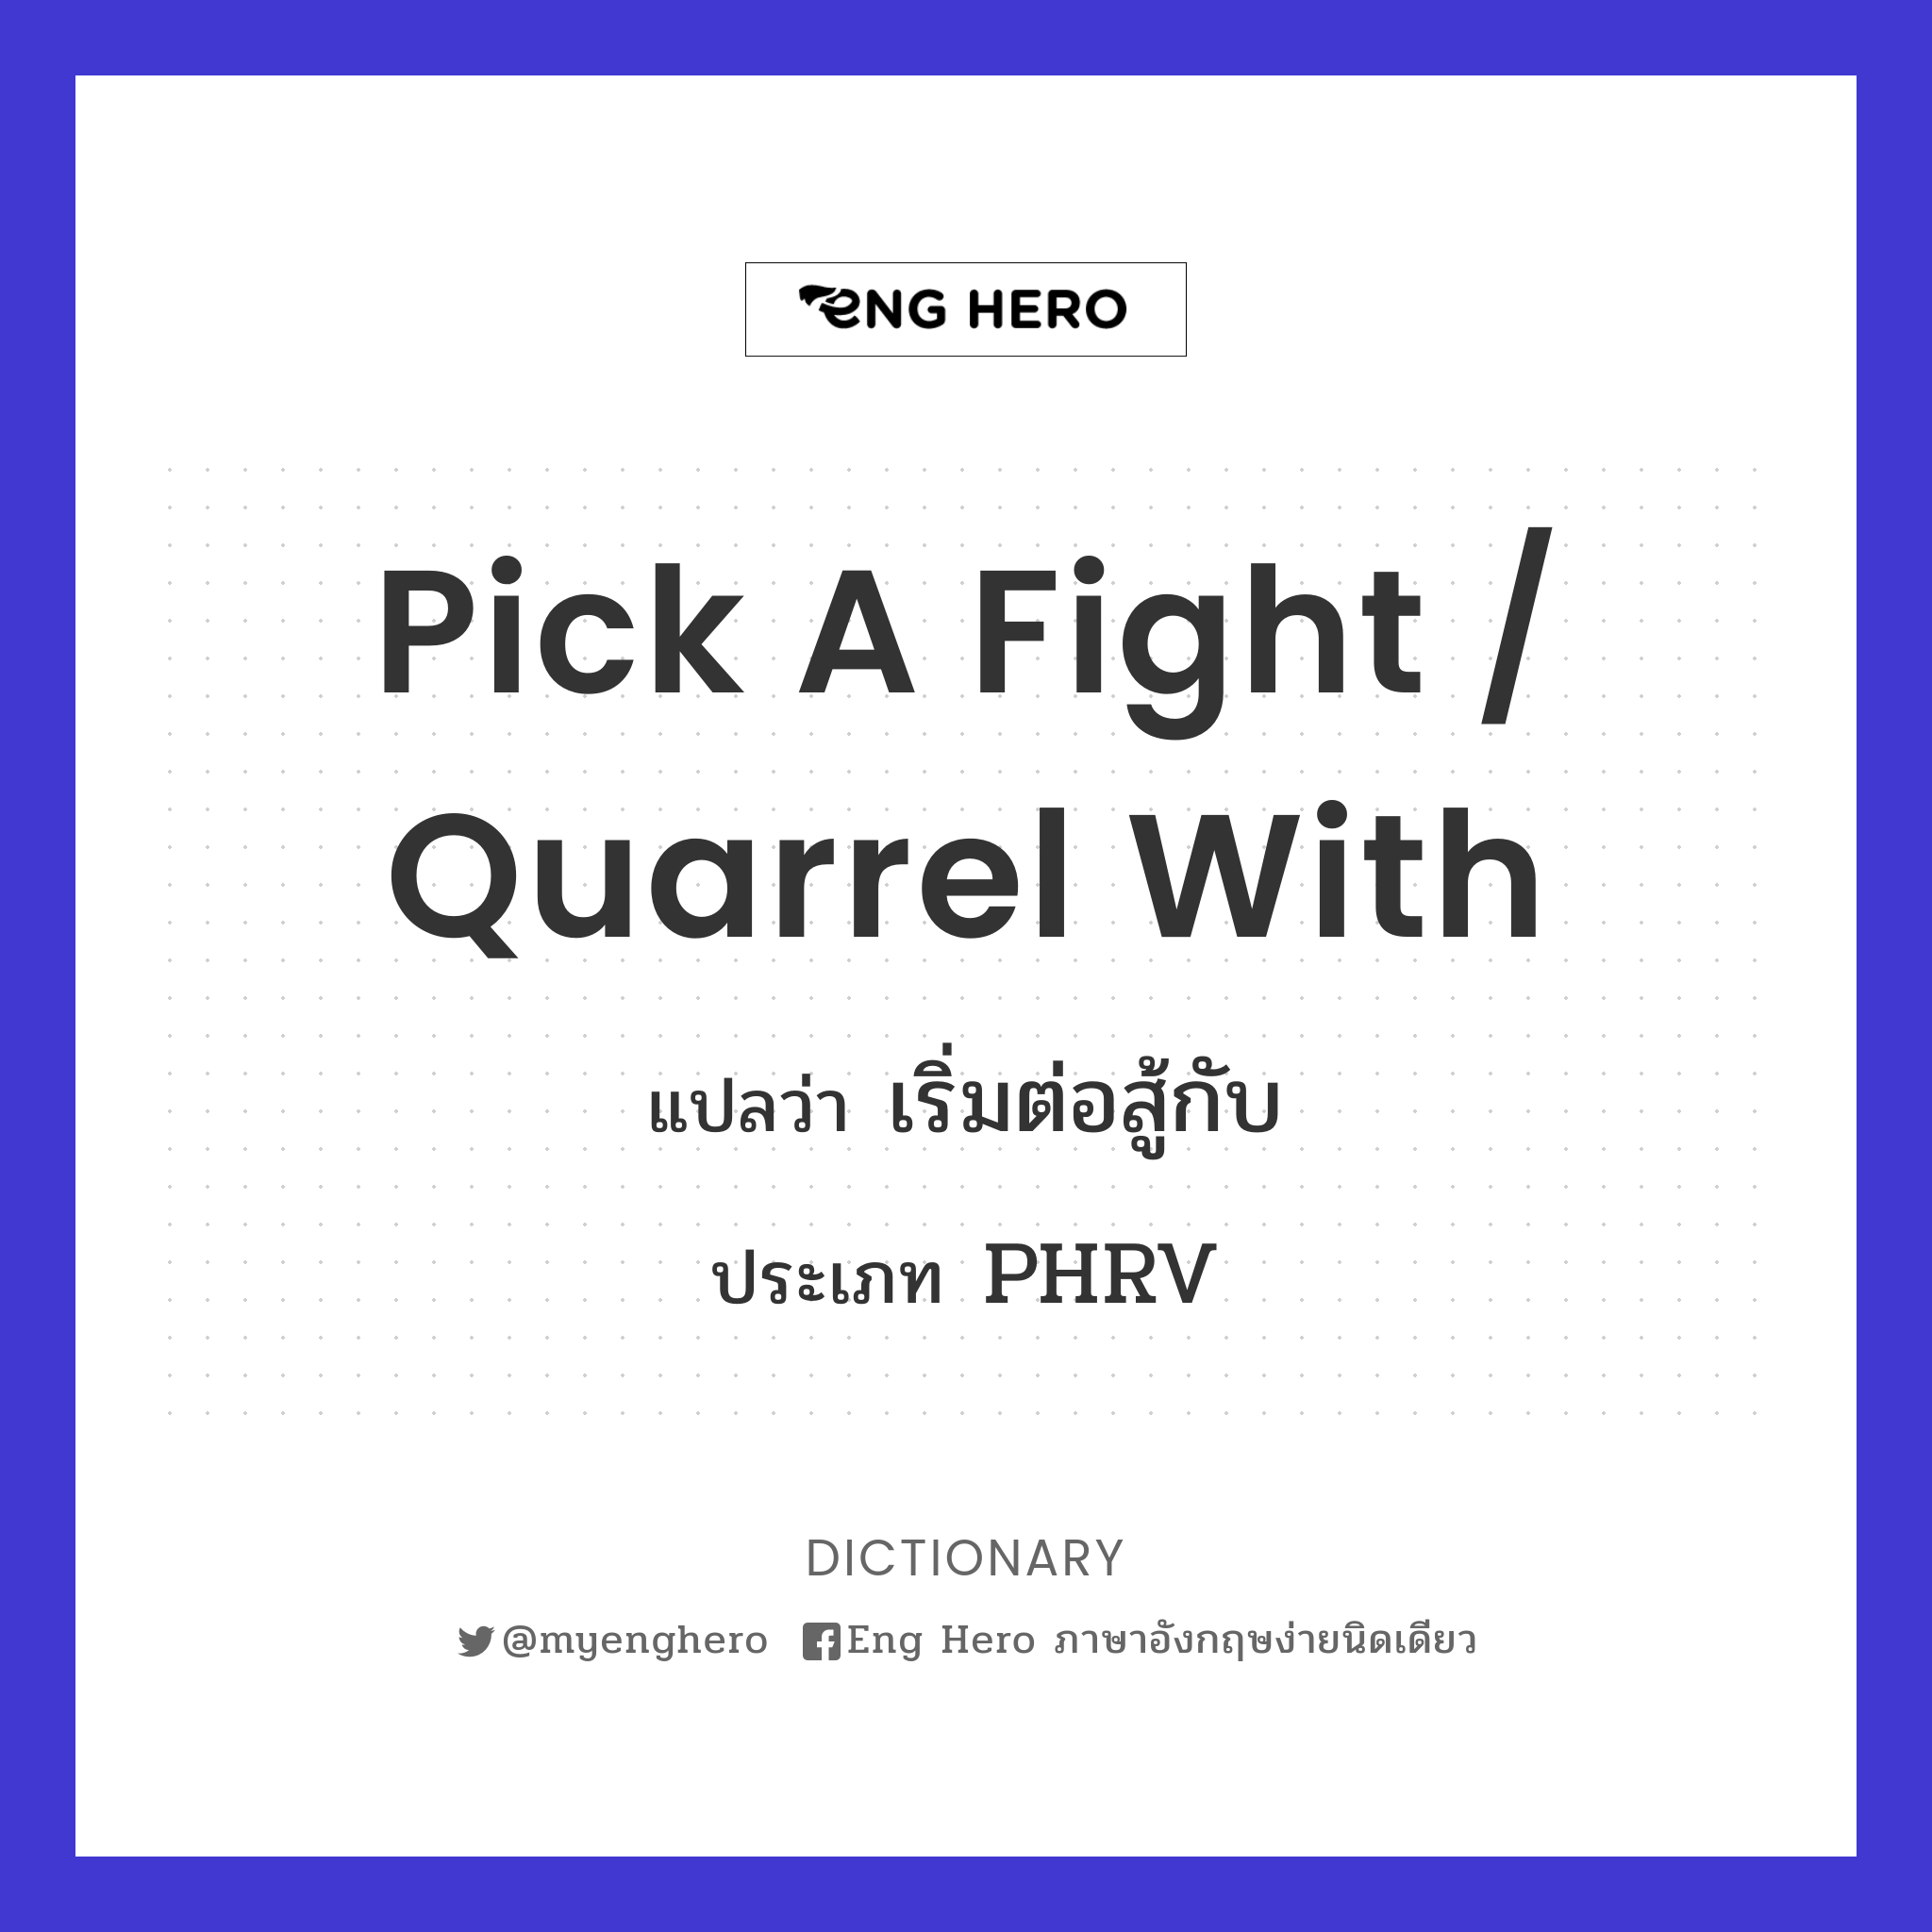 pick a fight / quarrel with